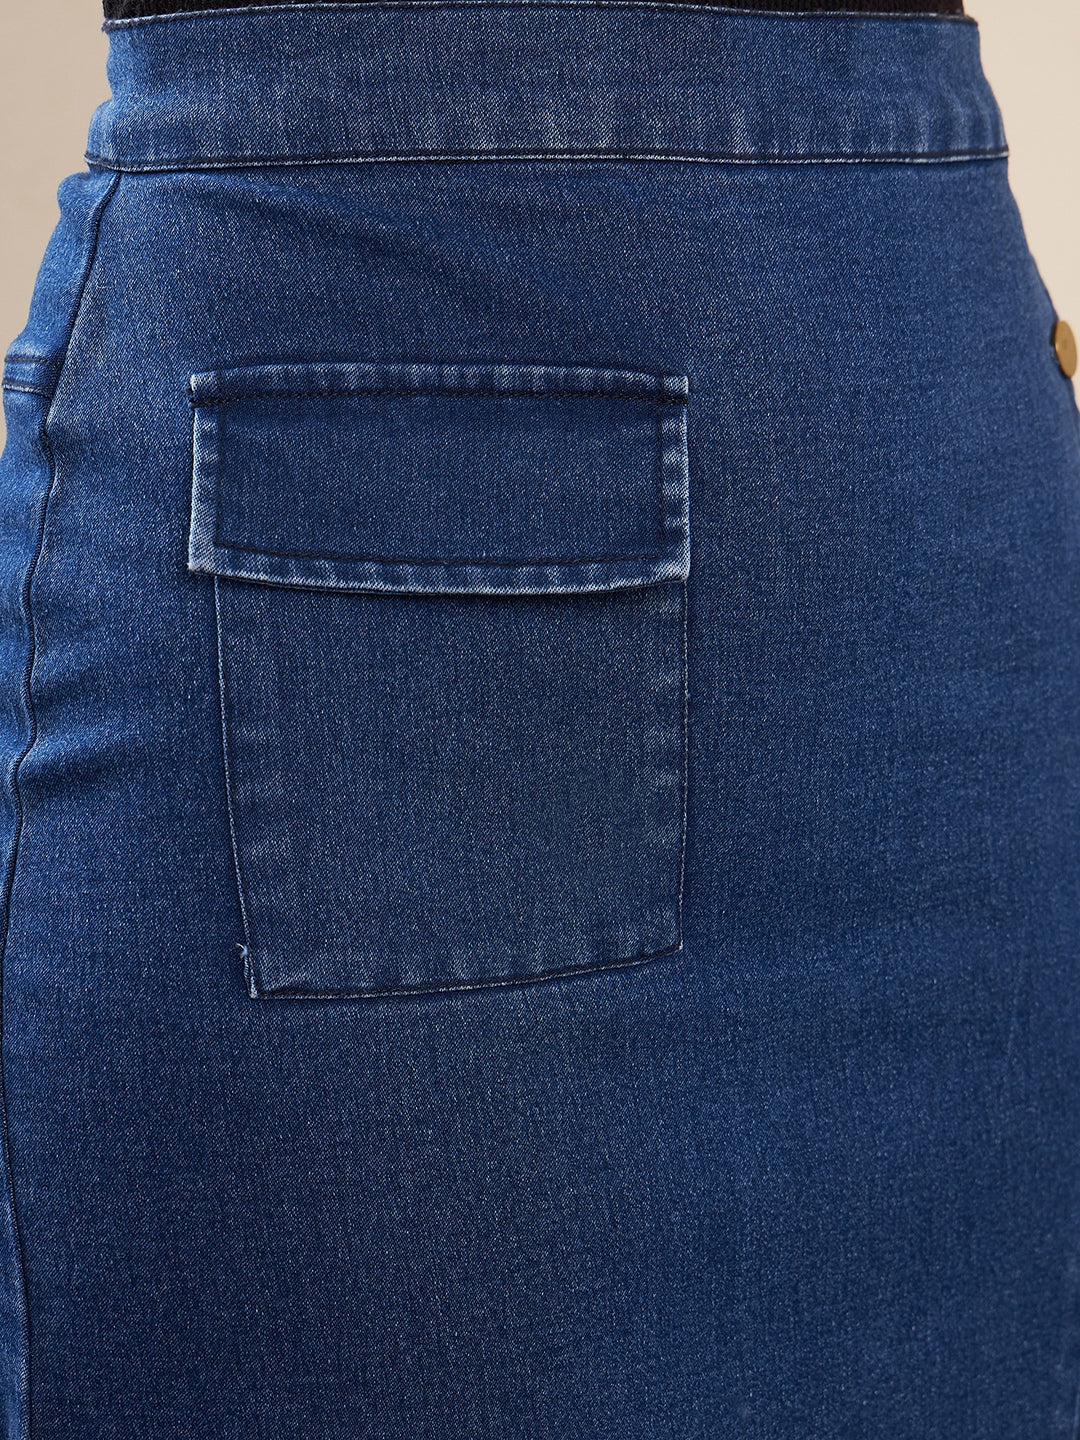 Stylestone Women's Denim Skirt with Front Flap